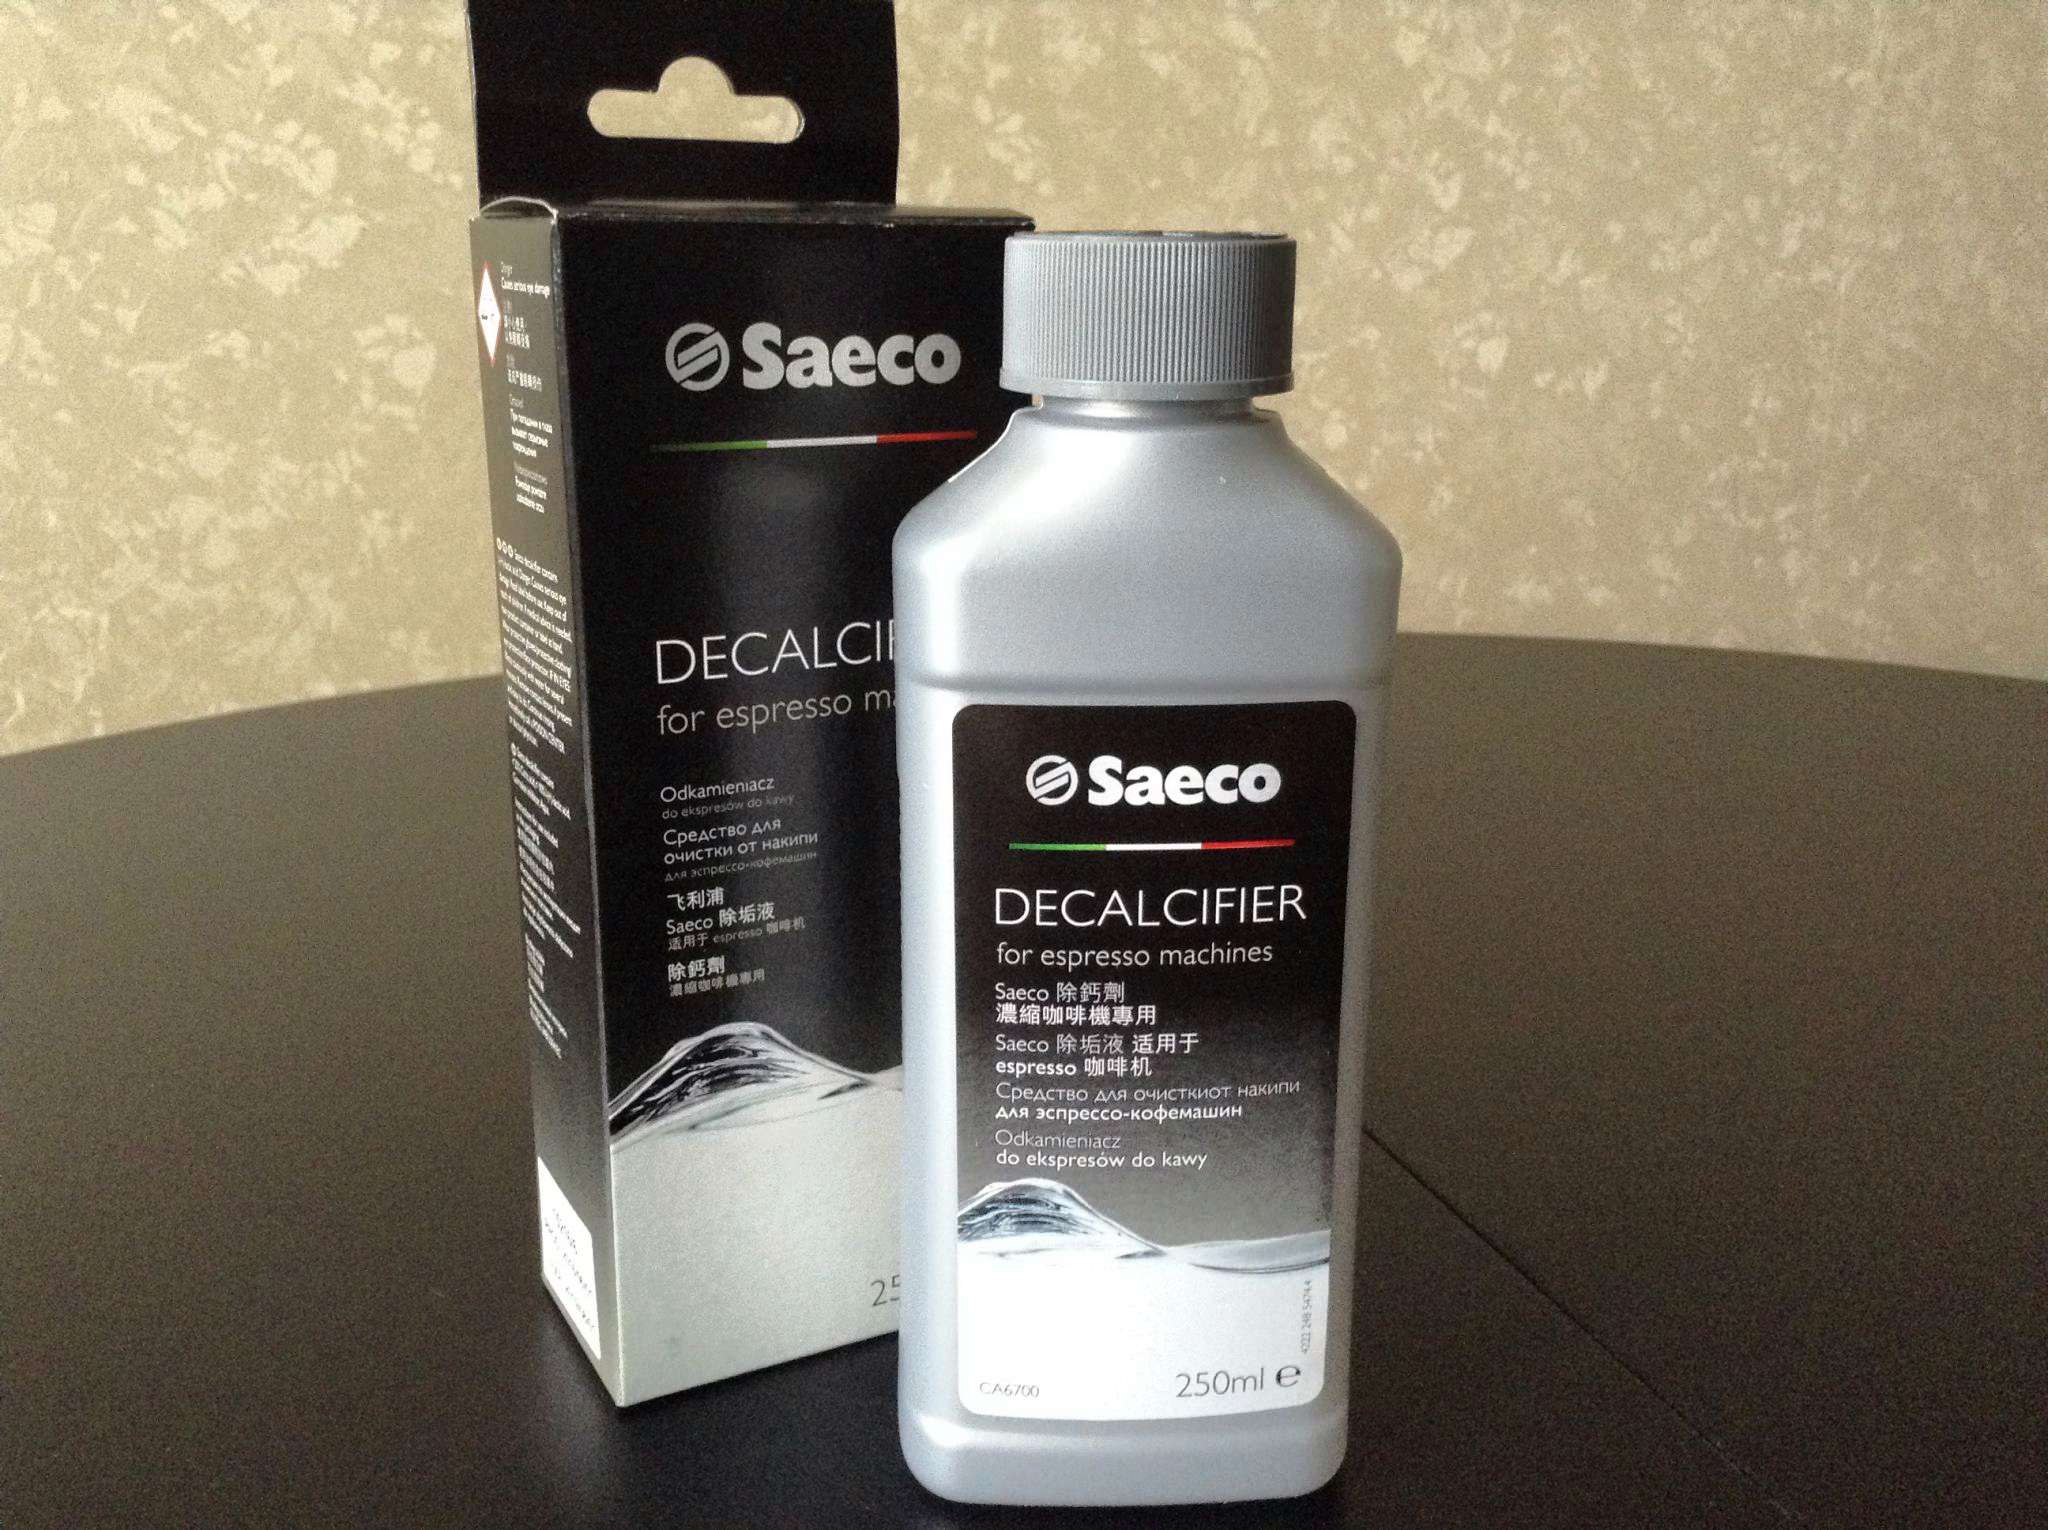 Saeco очистка от накипи. Philips Saeco ca6700/99. Philips Saeco 6700. Средство для очистки кофемашины Филипс от накипи. Средство Saeco от накипи Decalcifier.